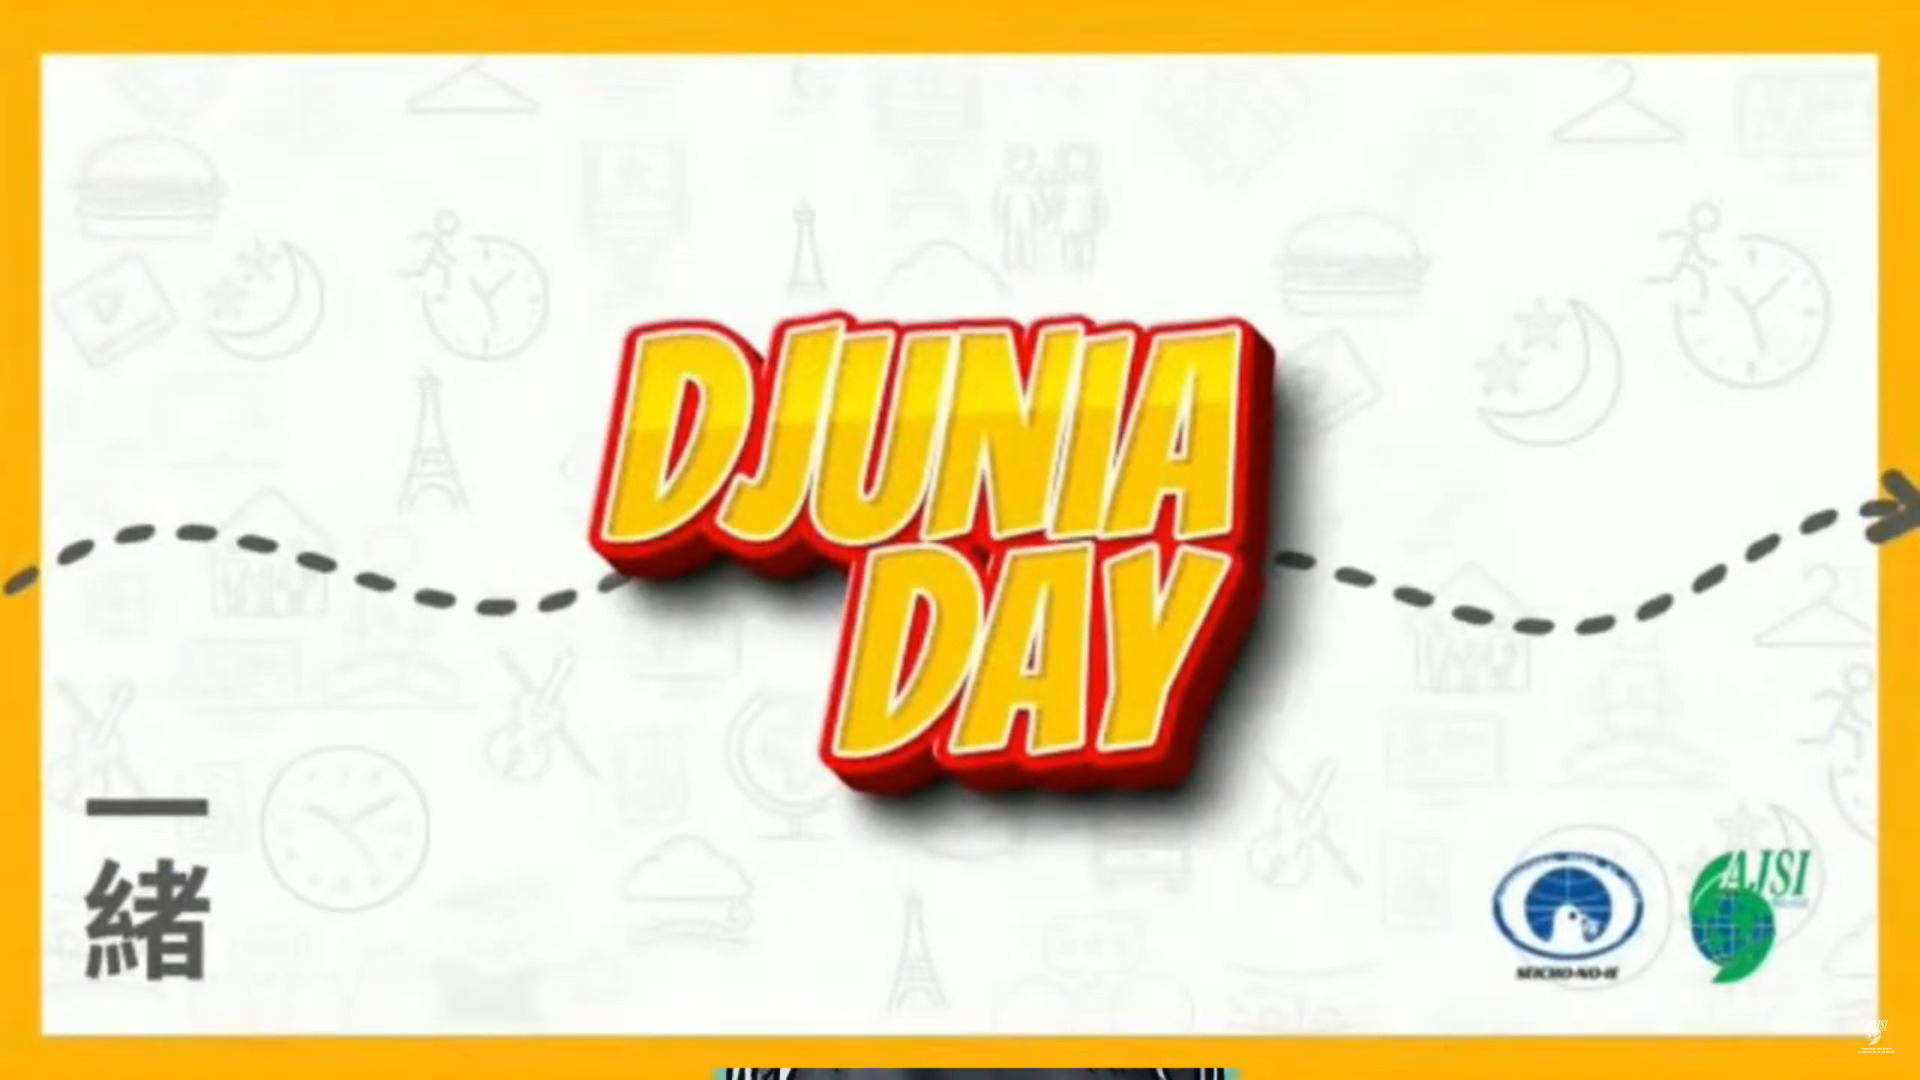 djunia67 DJUNIA DAY - O evento que bombou entre os juvenis e junia